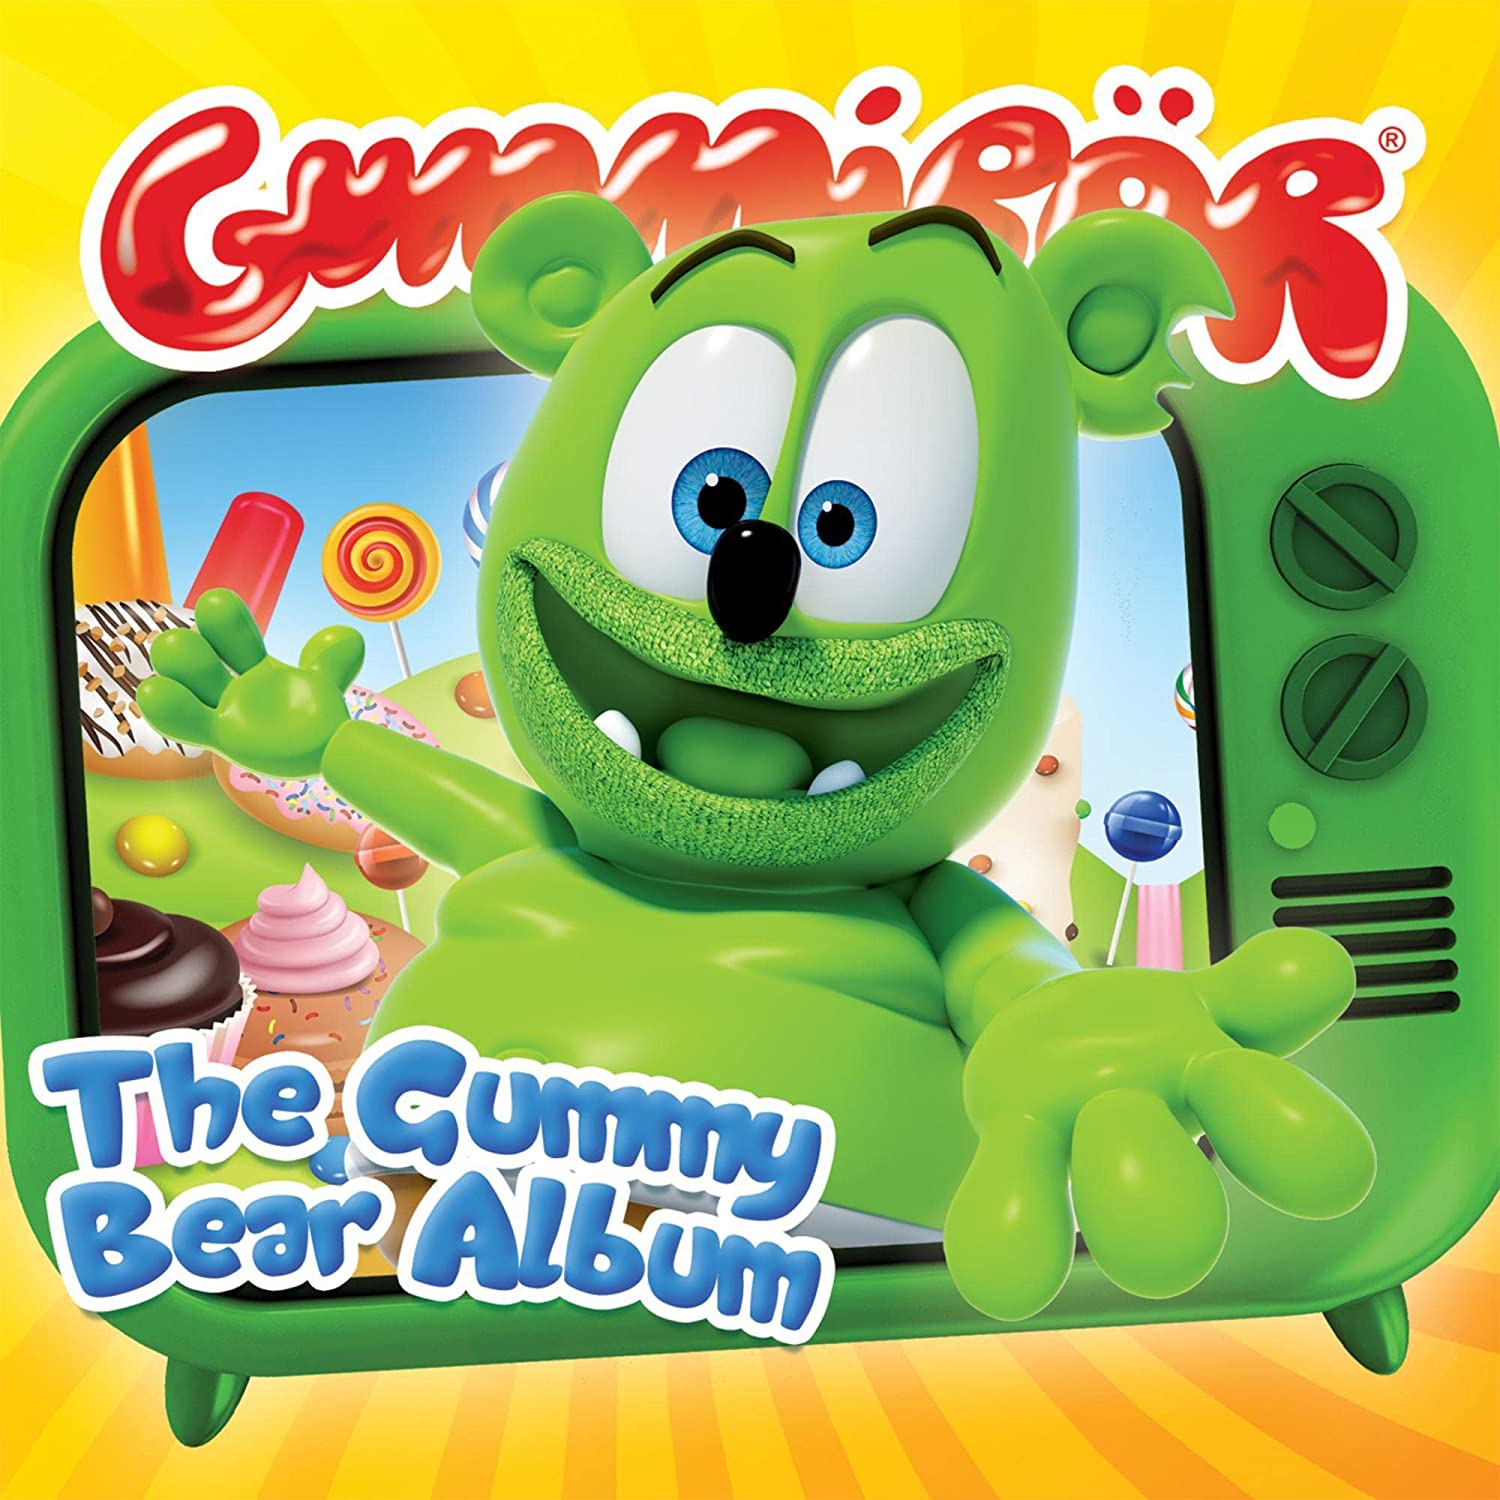 I Am Your Gummy Bear - Wikipedia